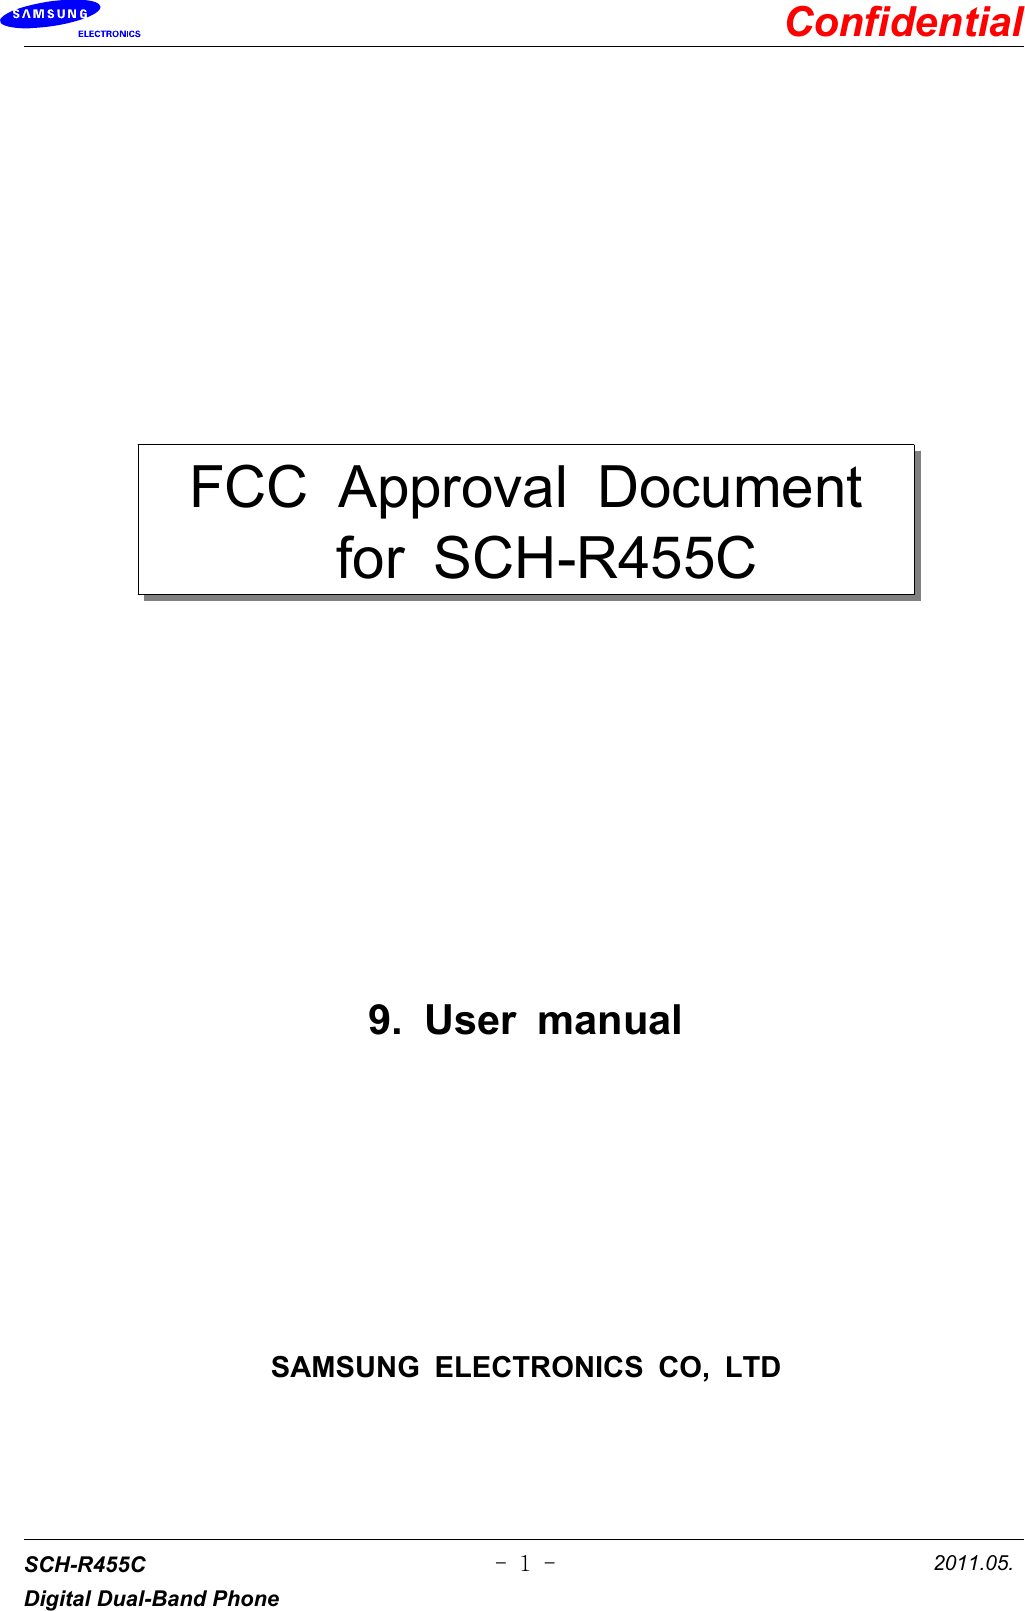 ConfidentialSCH-R455CDigital Dual-Band Phone2011.05.-1-FCC Approval Documentfor SCH-R455C 9. User manualSAMSUNG ELECTRONICS CO, LTD